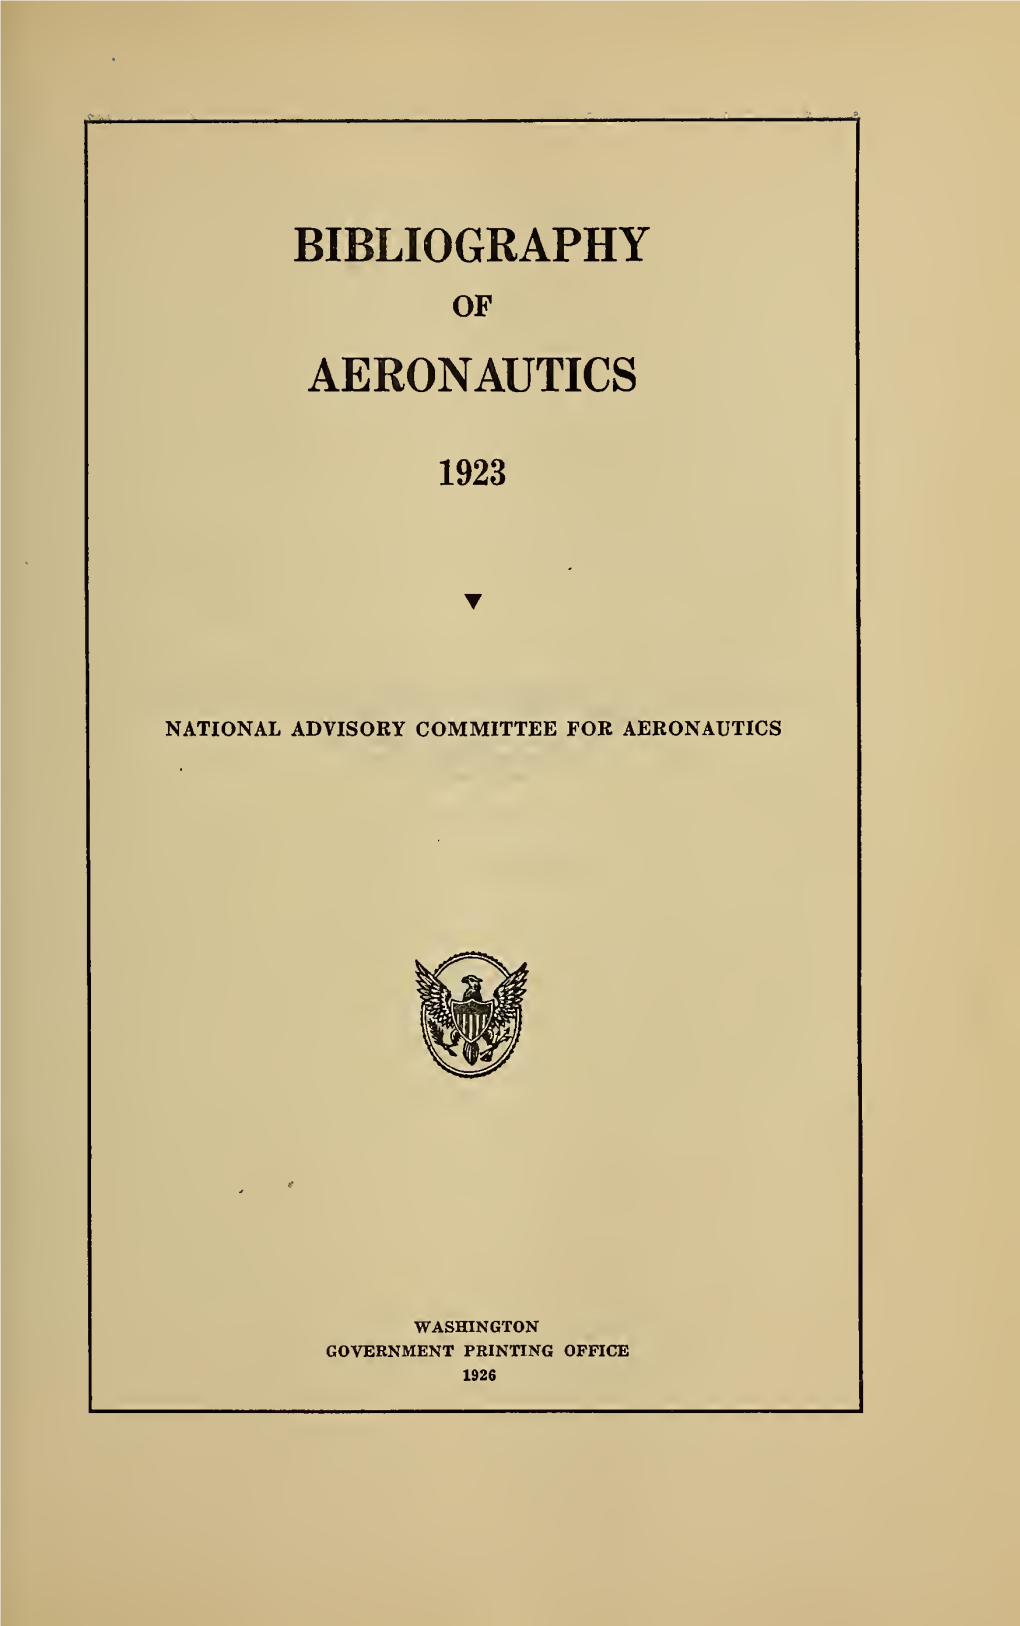 Bibliography of Aeronautics by Paul Brockett 1923